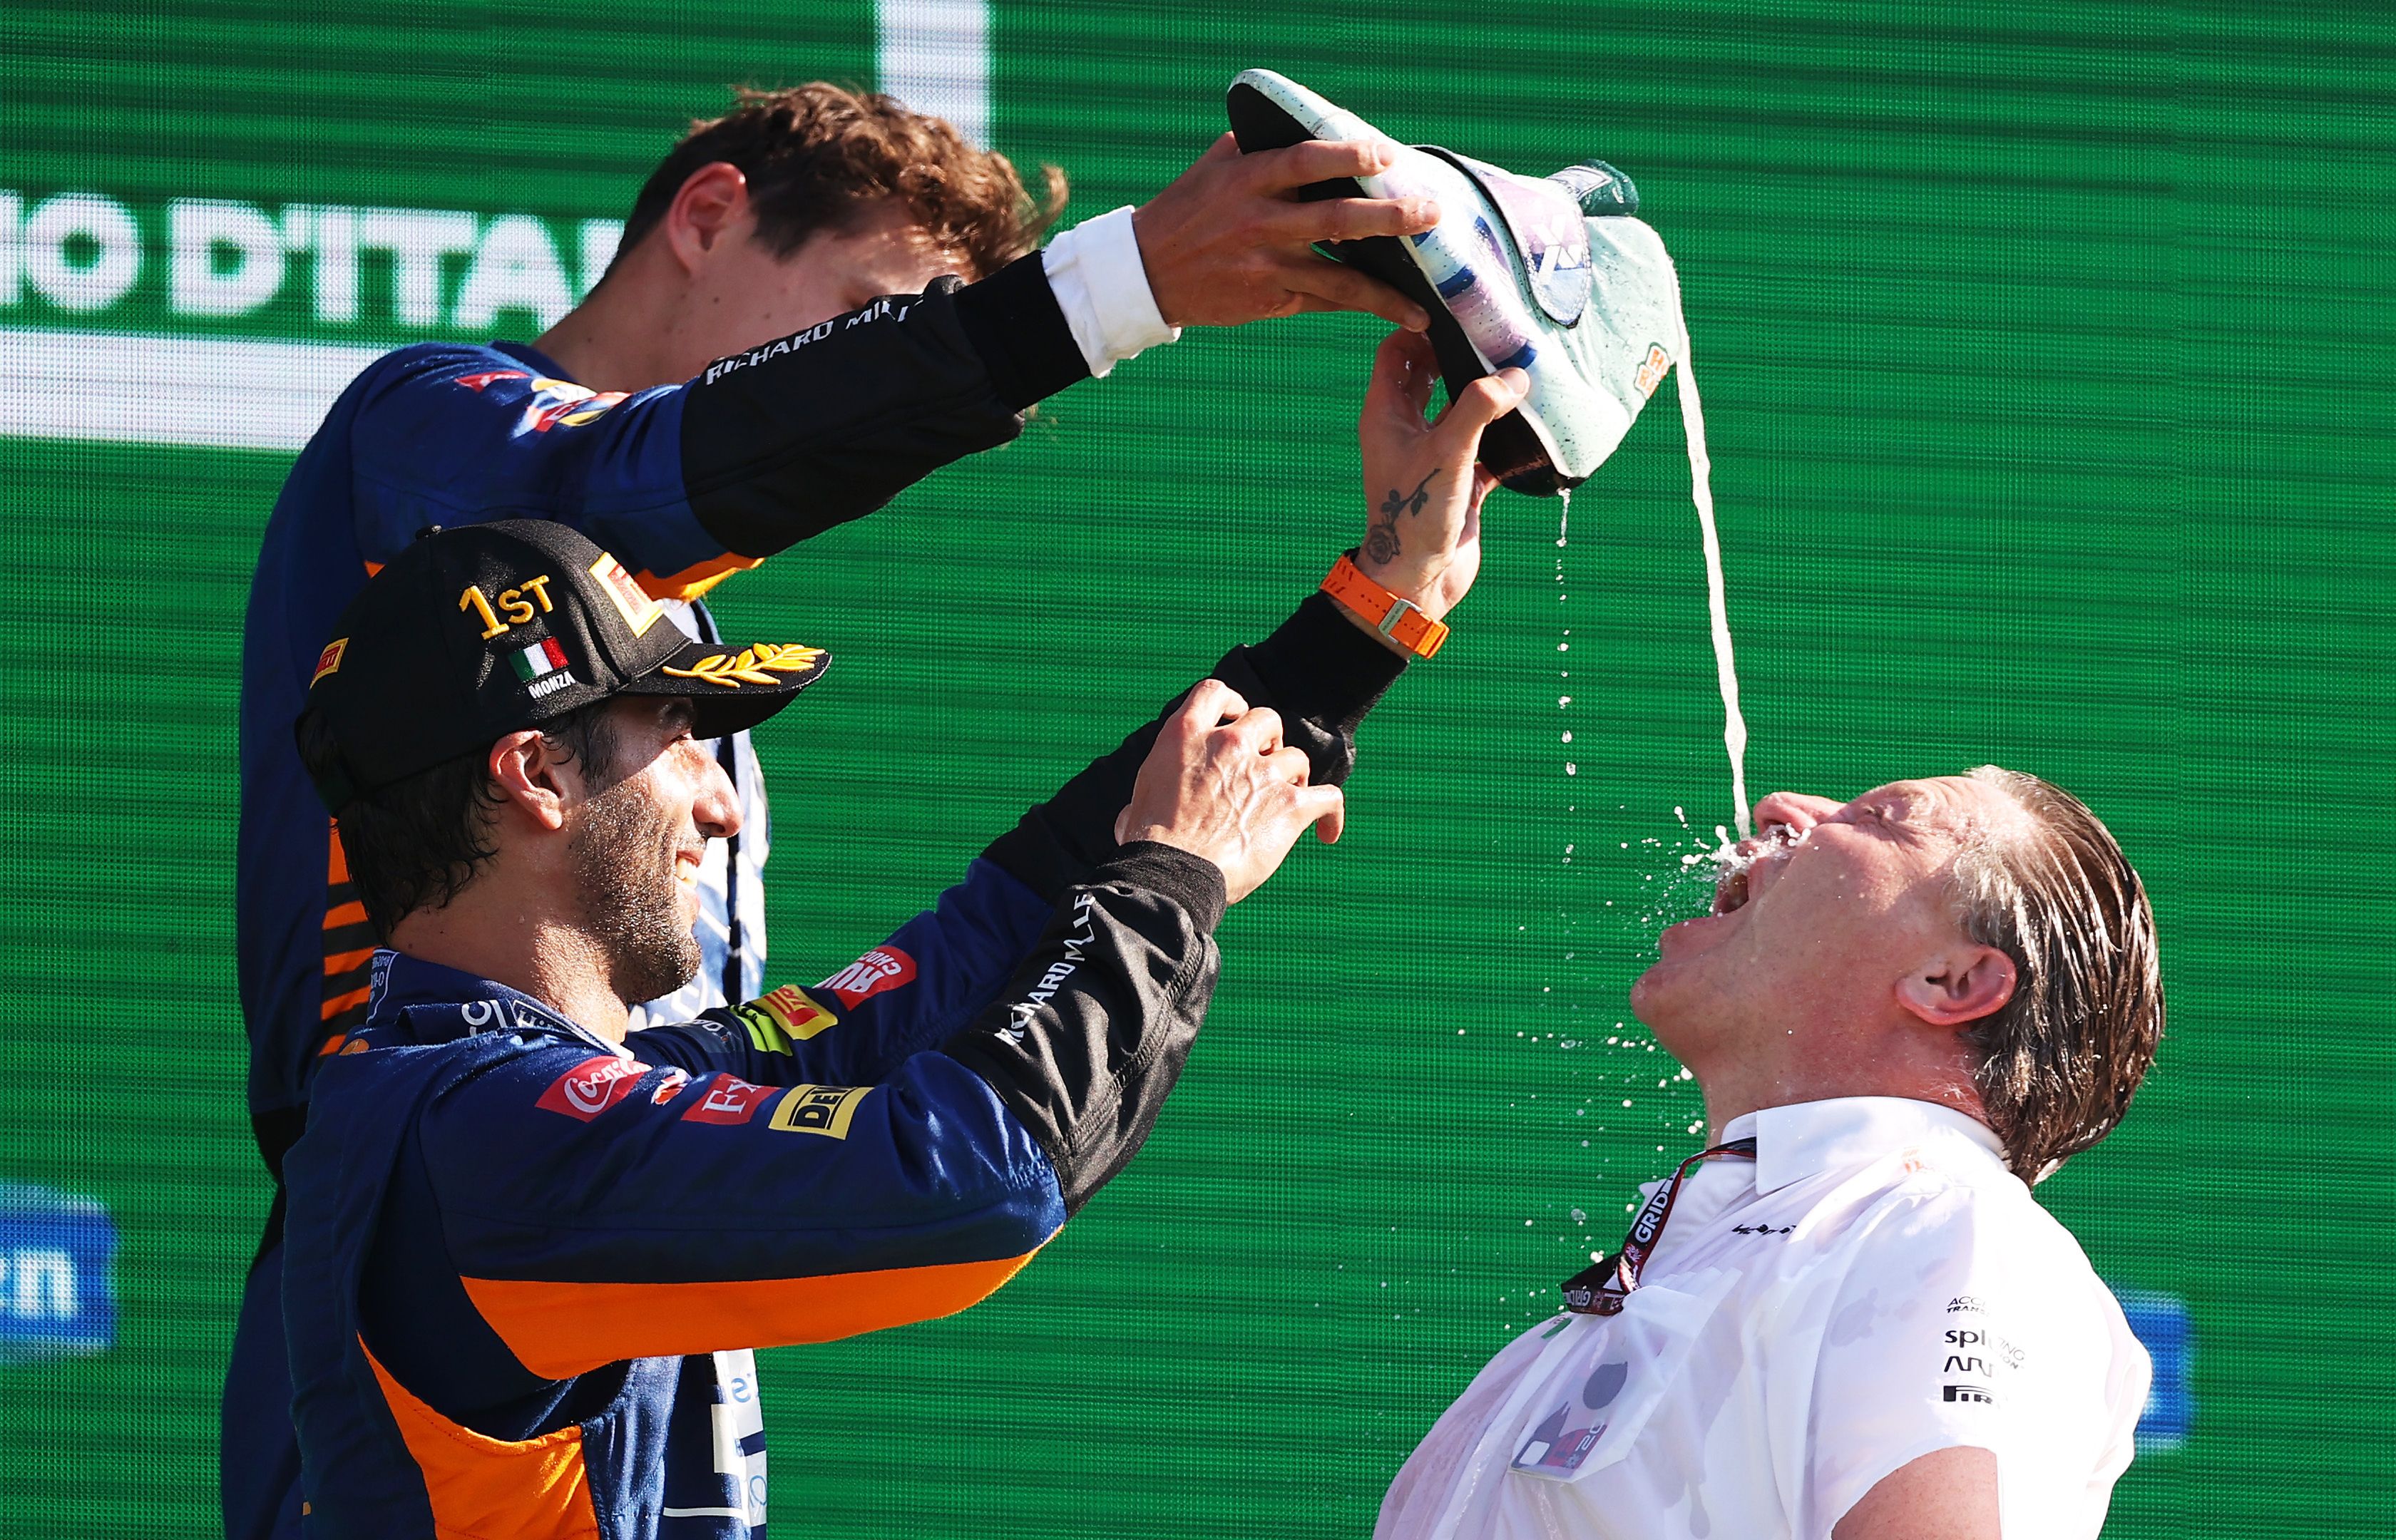 McLaren boss Zak Brown says Daniel Ricciardo's Italian GP win the proudest day of his career 